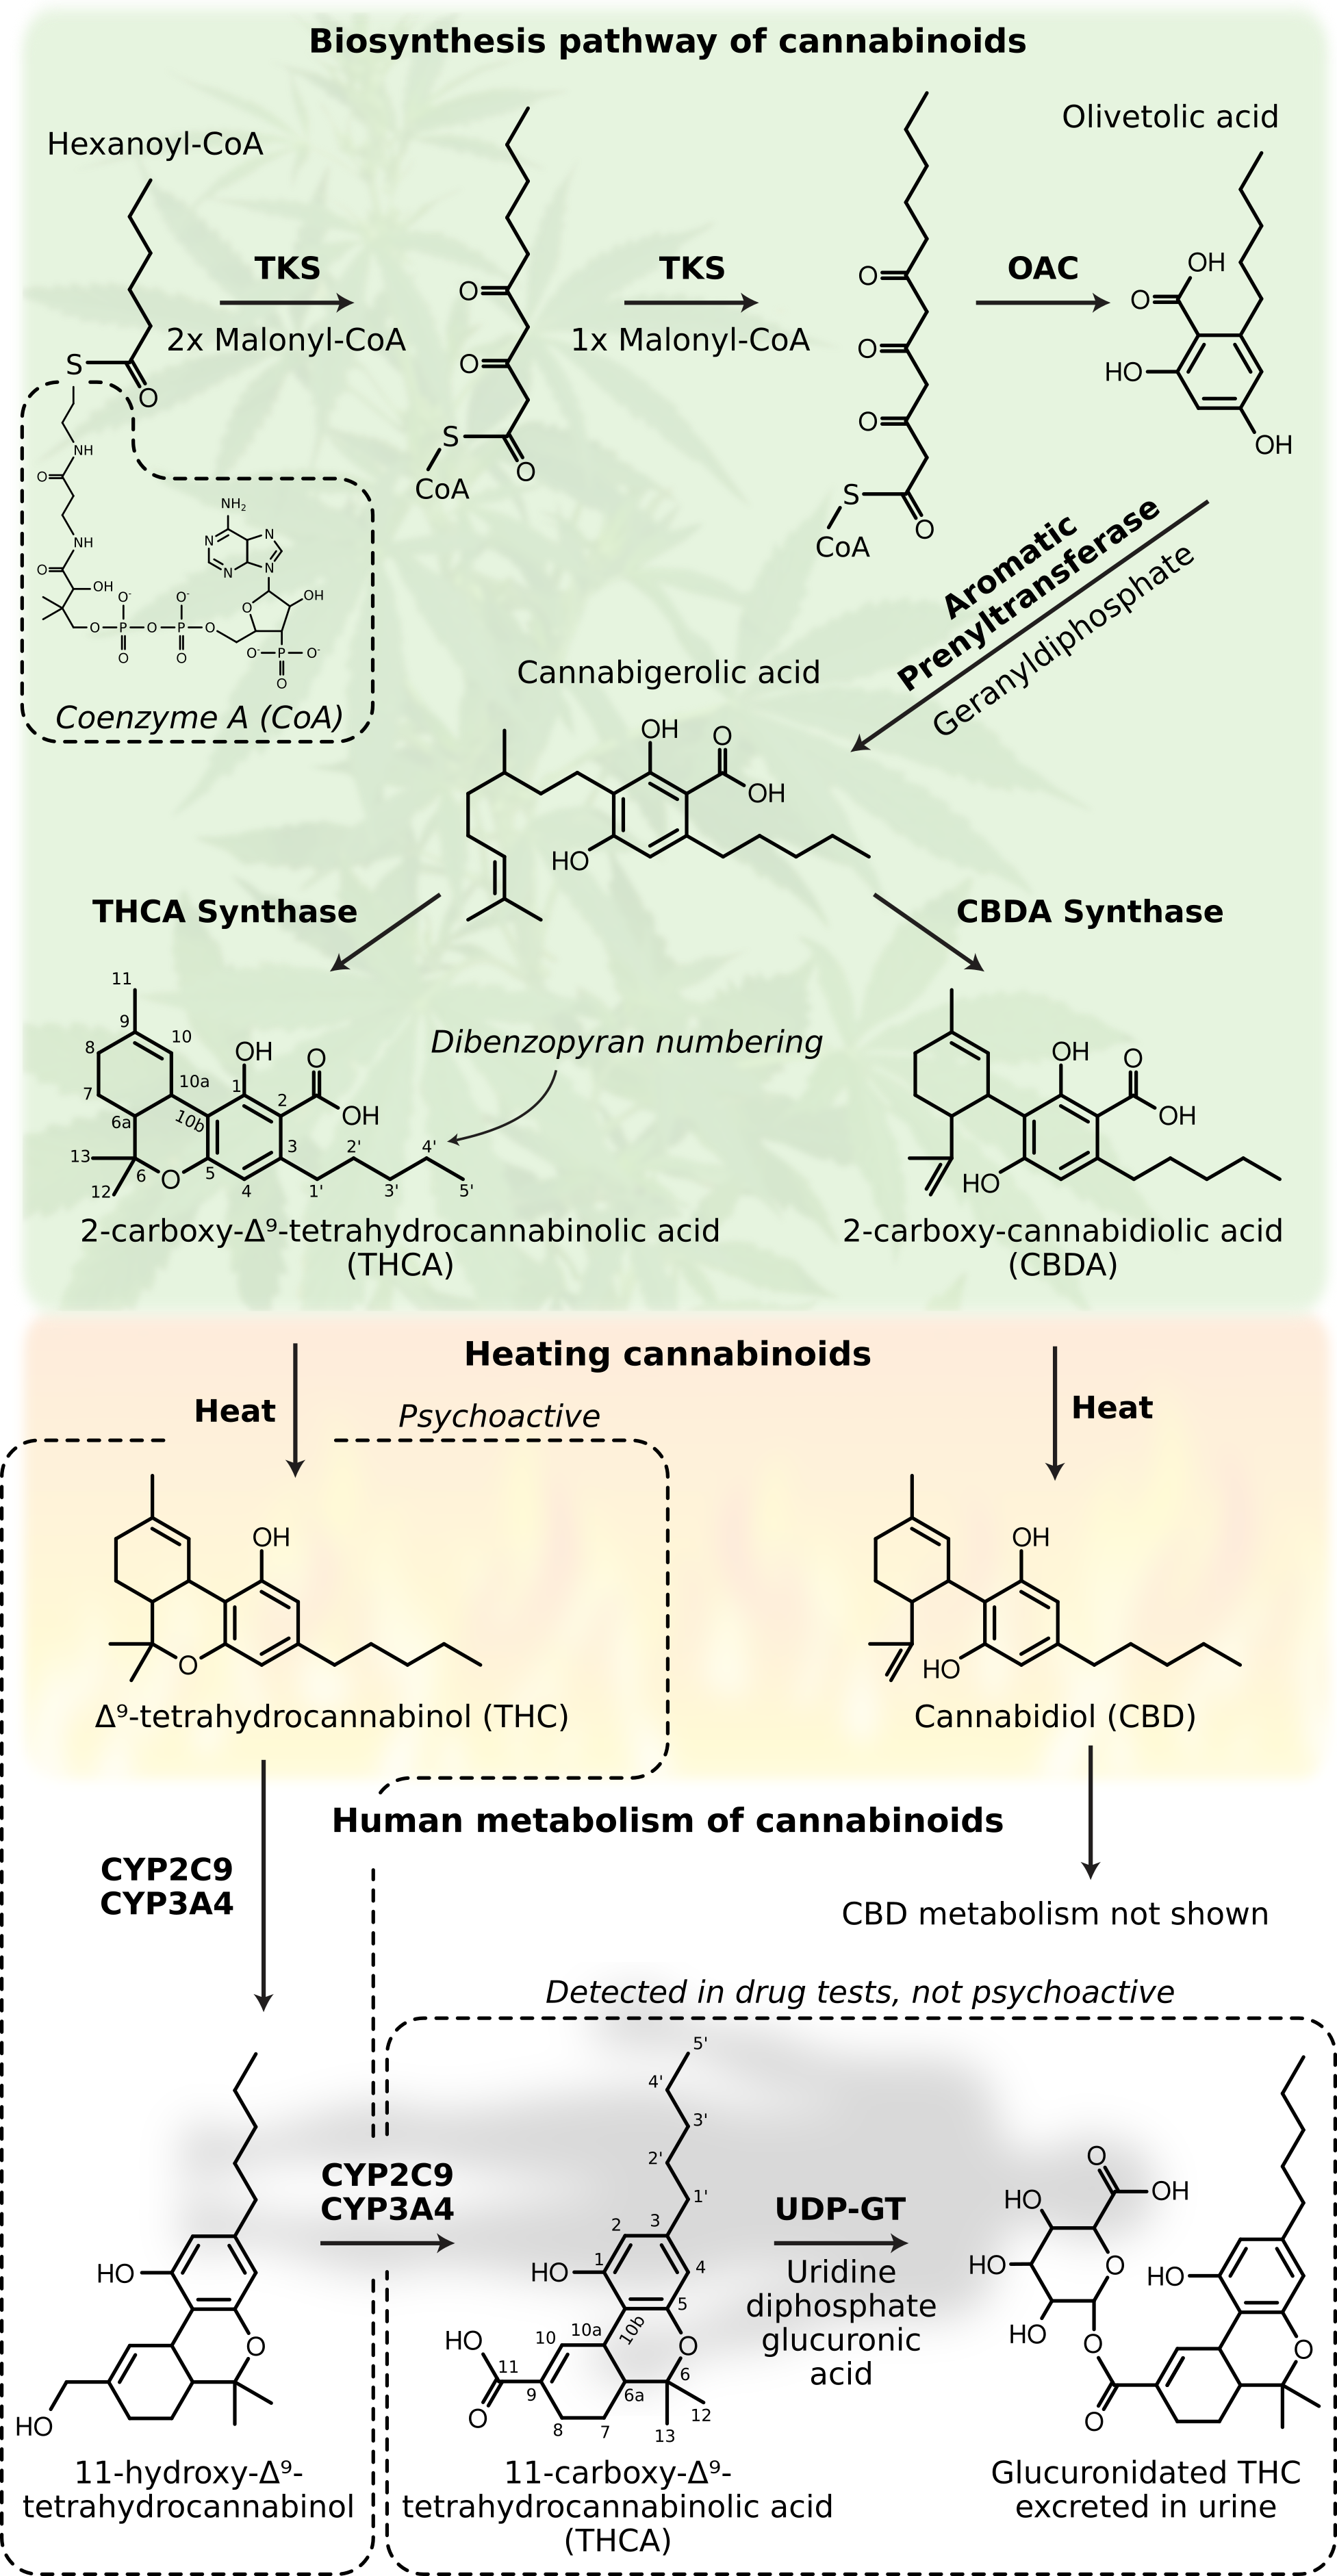 Biosynthesis pathway of cannabinoids